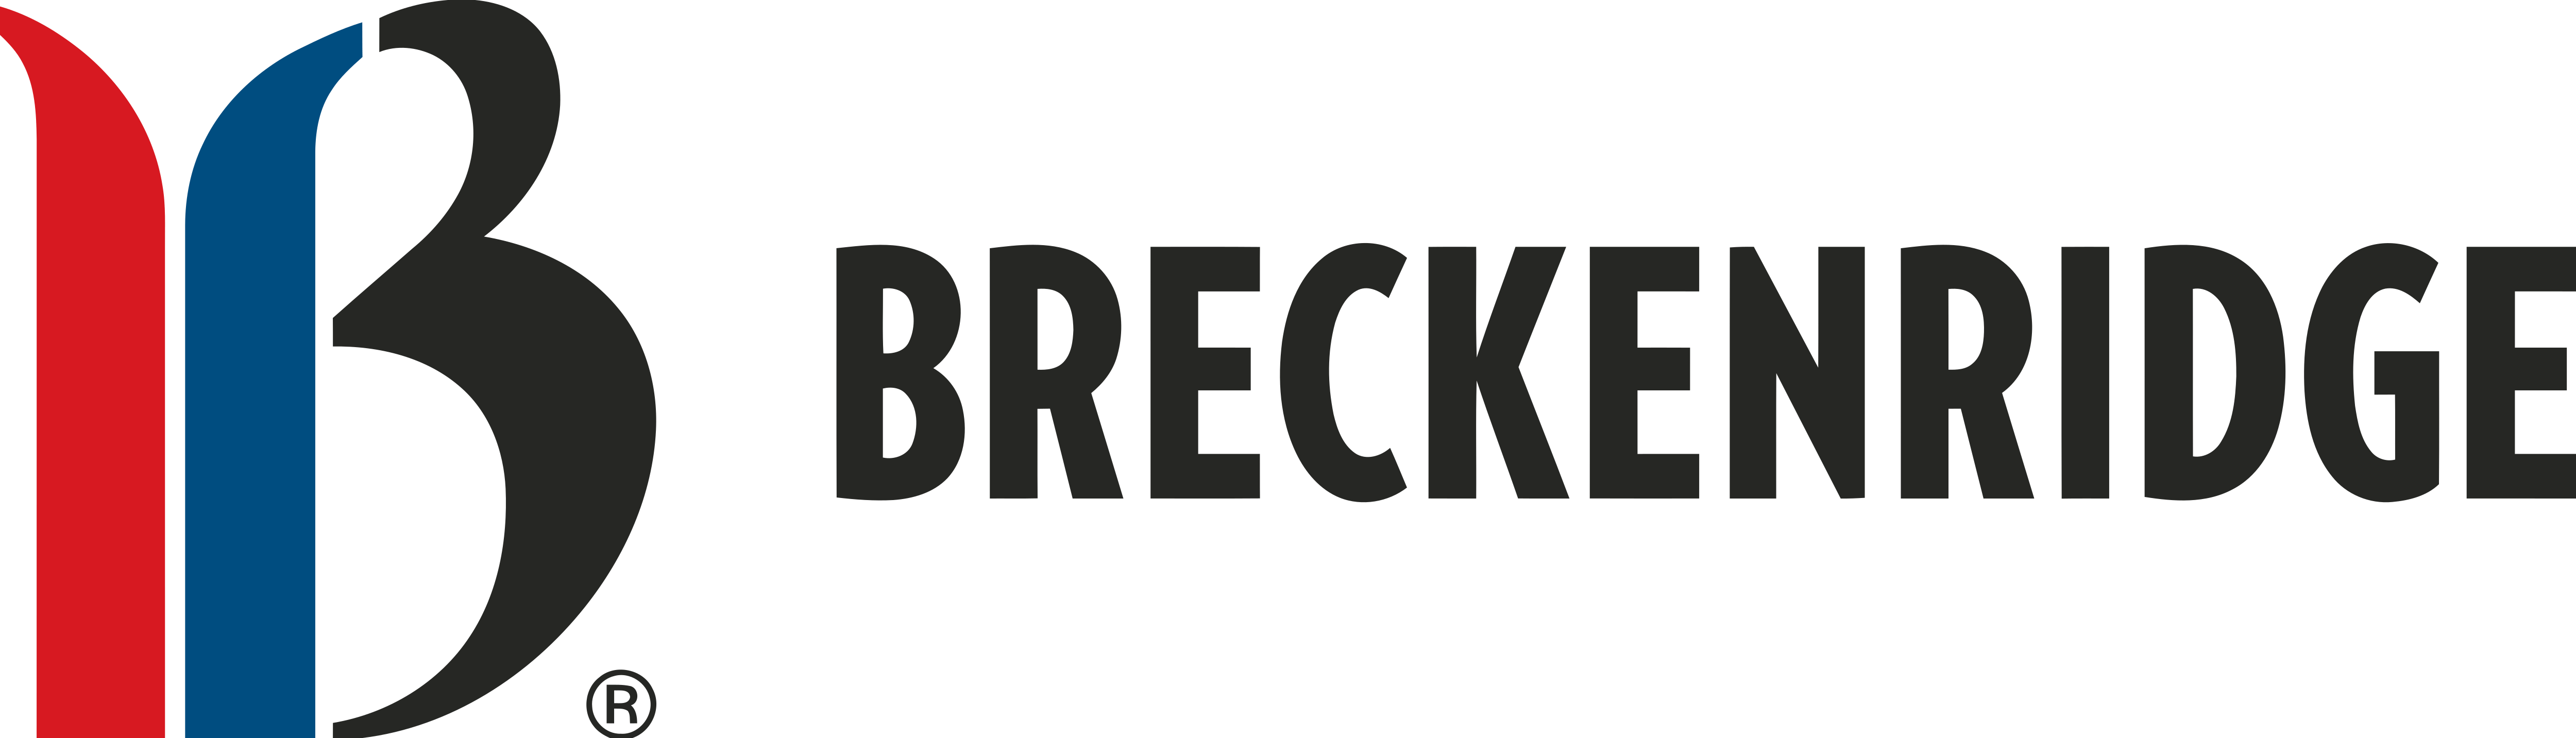 Breckenridge Logo - Breckenridge Ski Resort – Logos Download